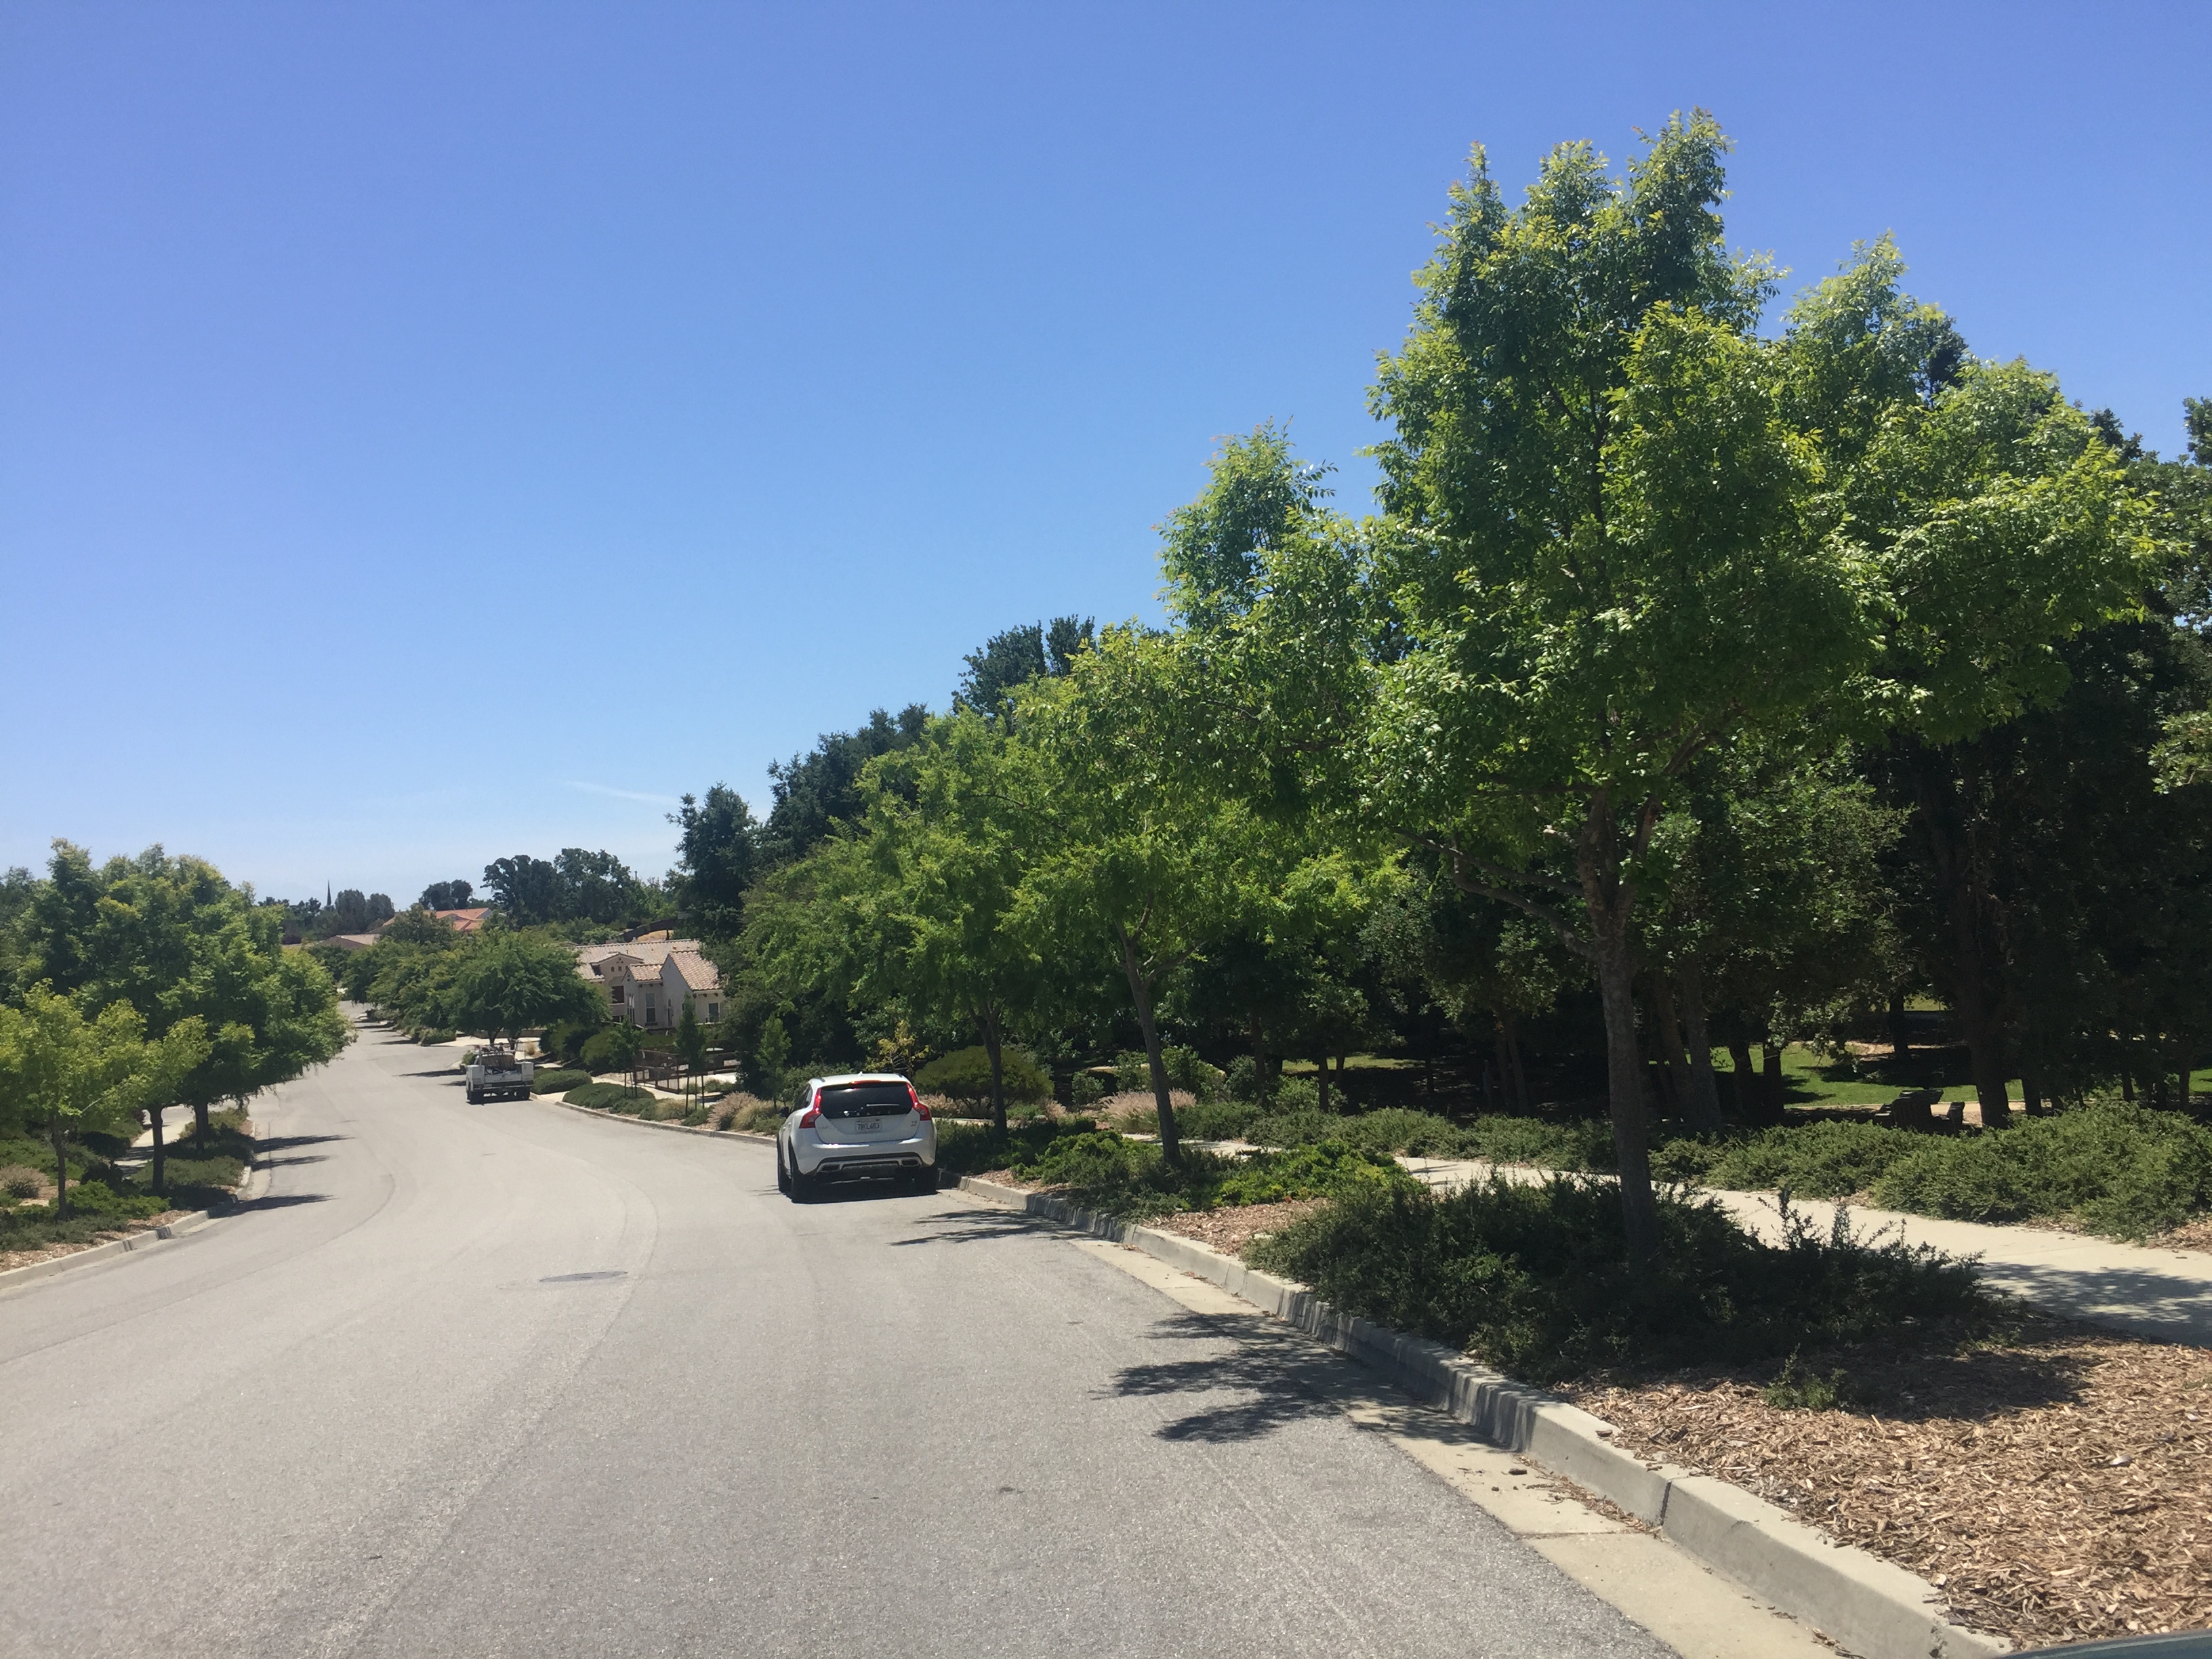 Street Parking at Apple Valley Park in Atascadero California